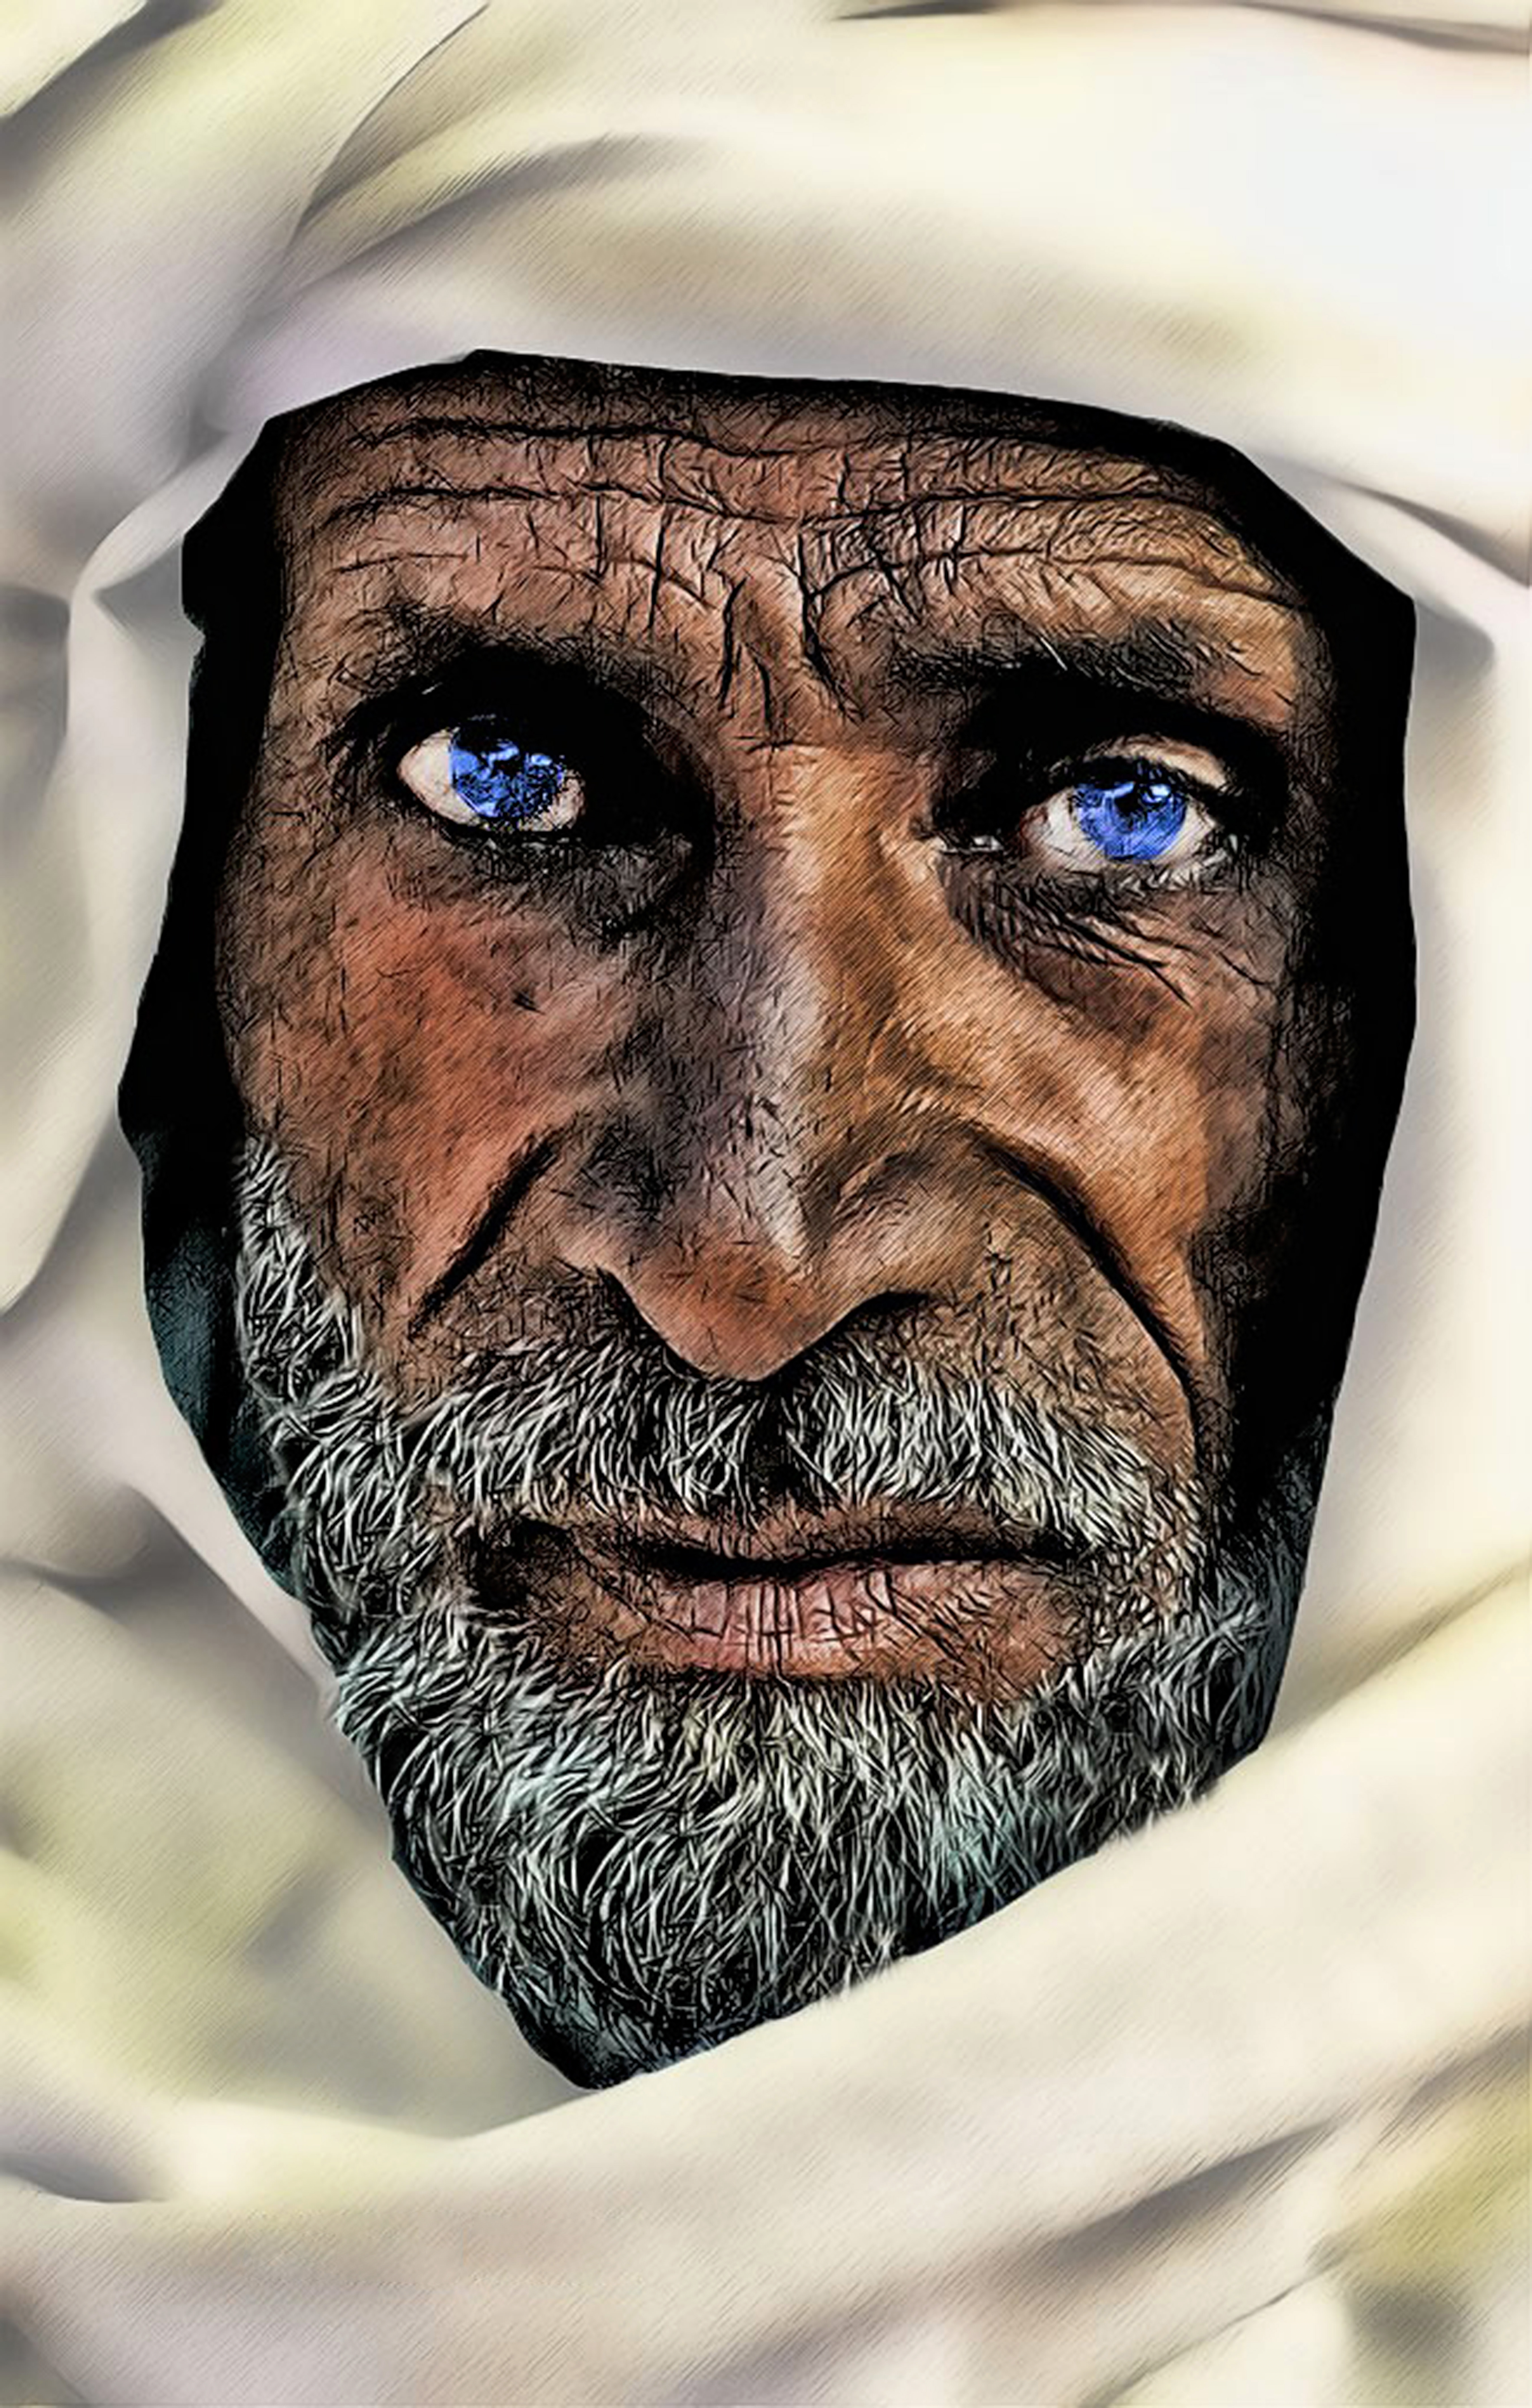 Arabic old man photo